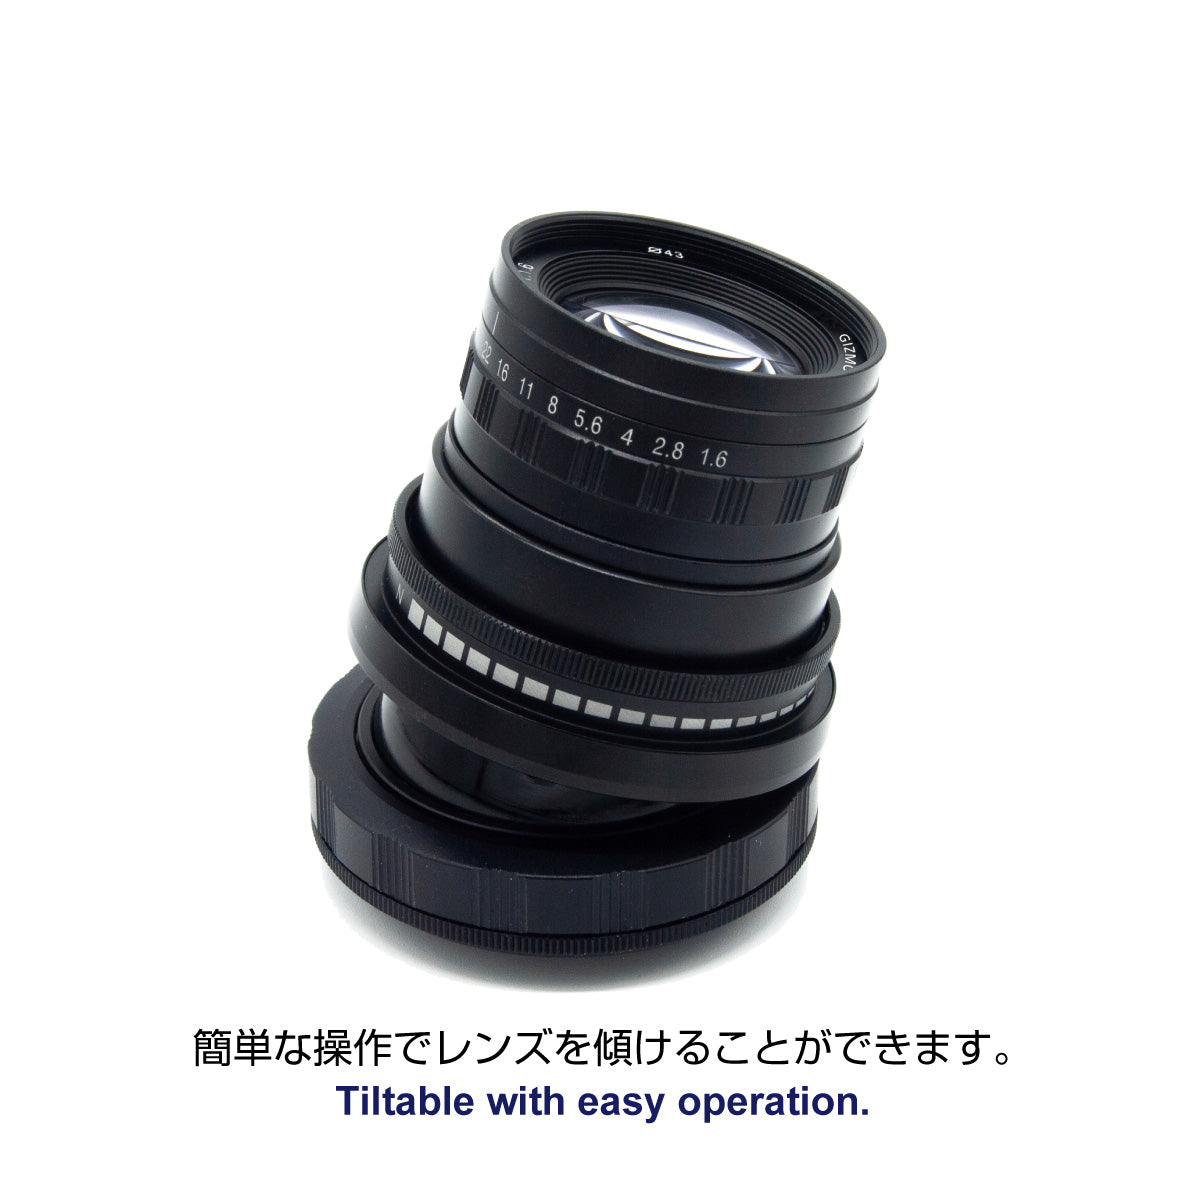 GIZMON Miniature Tilt Lens 50mm Xマウント